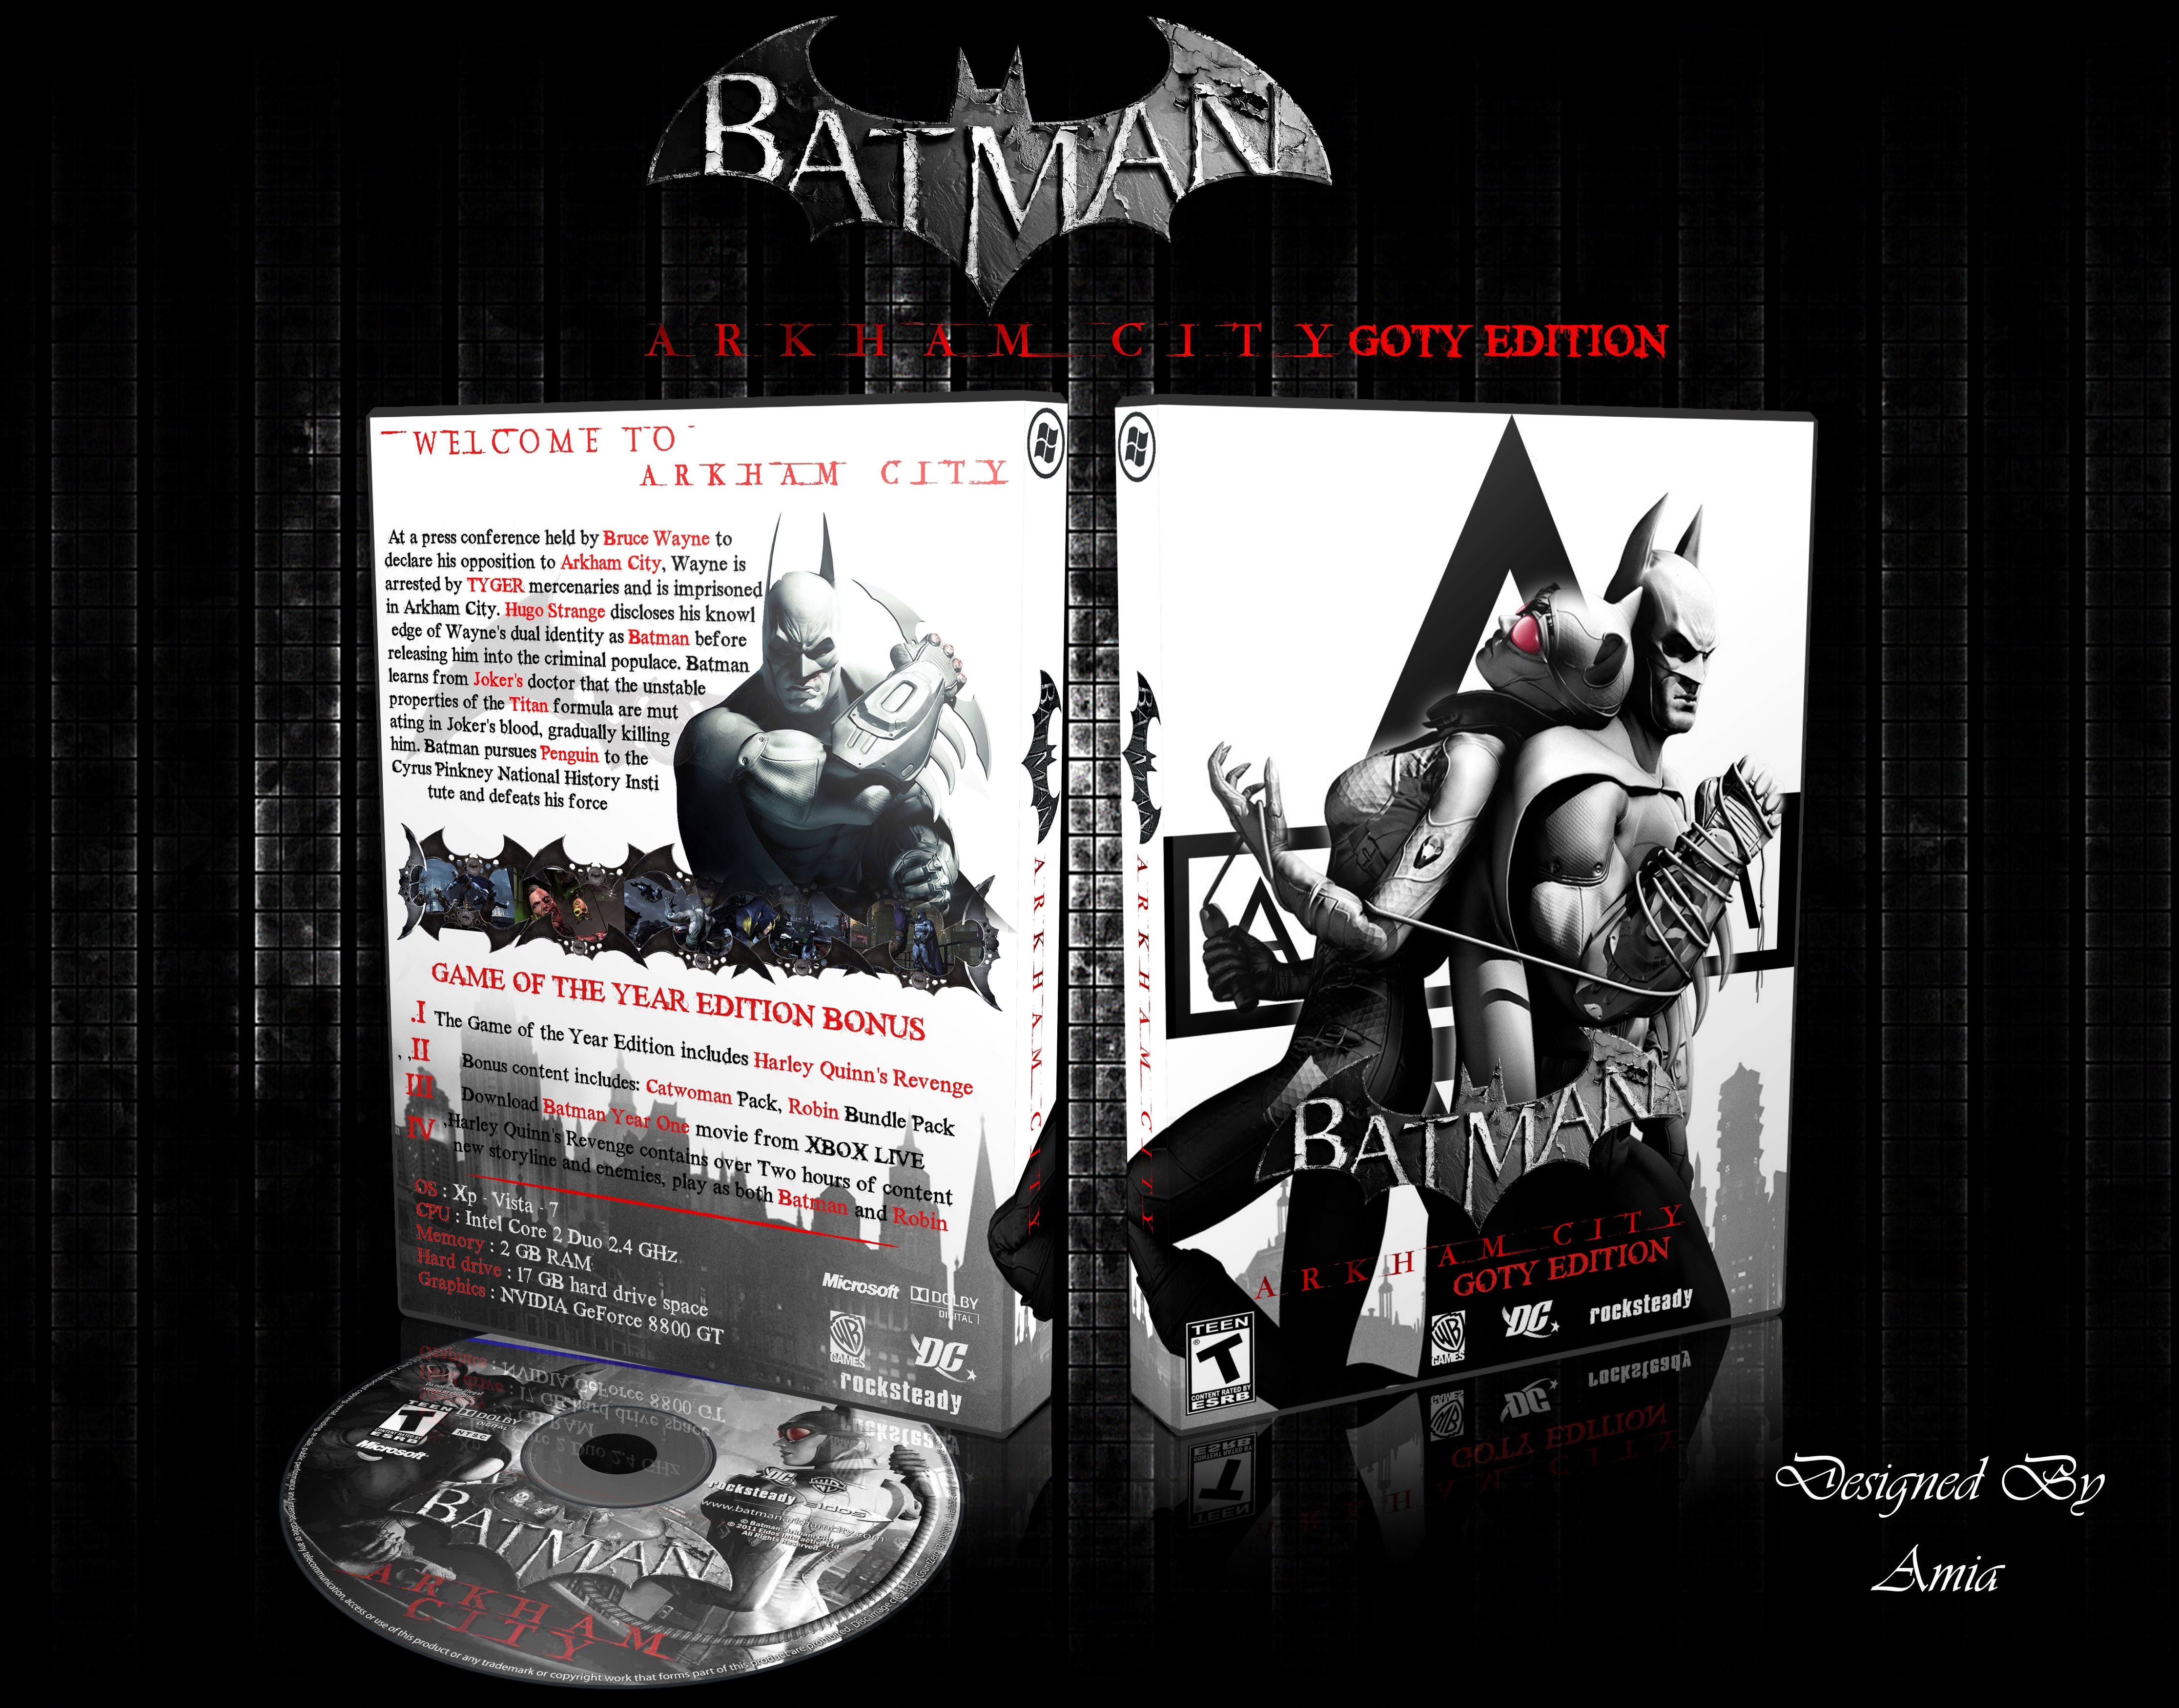 Batman Arkham City - Game Gf The Year Edition box cover